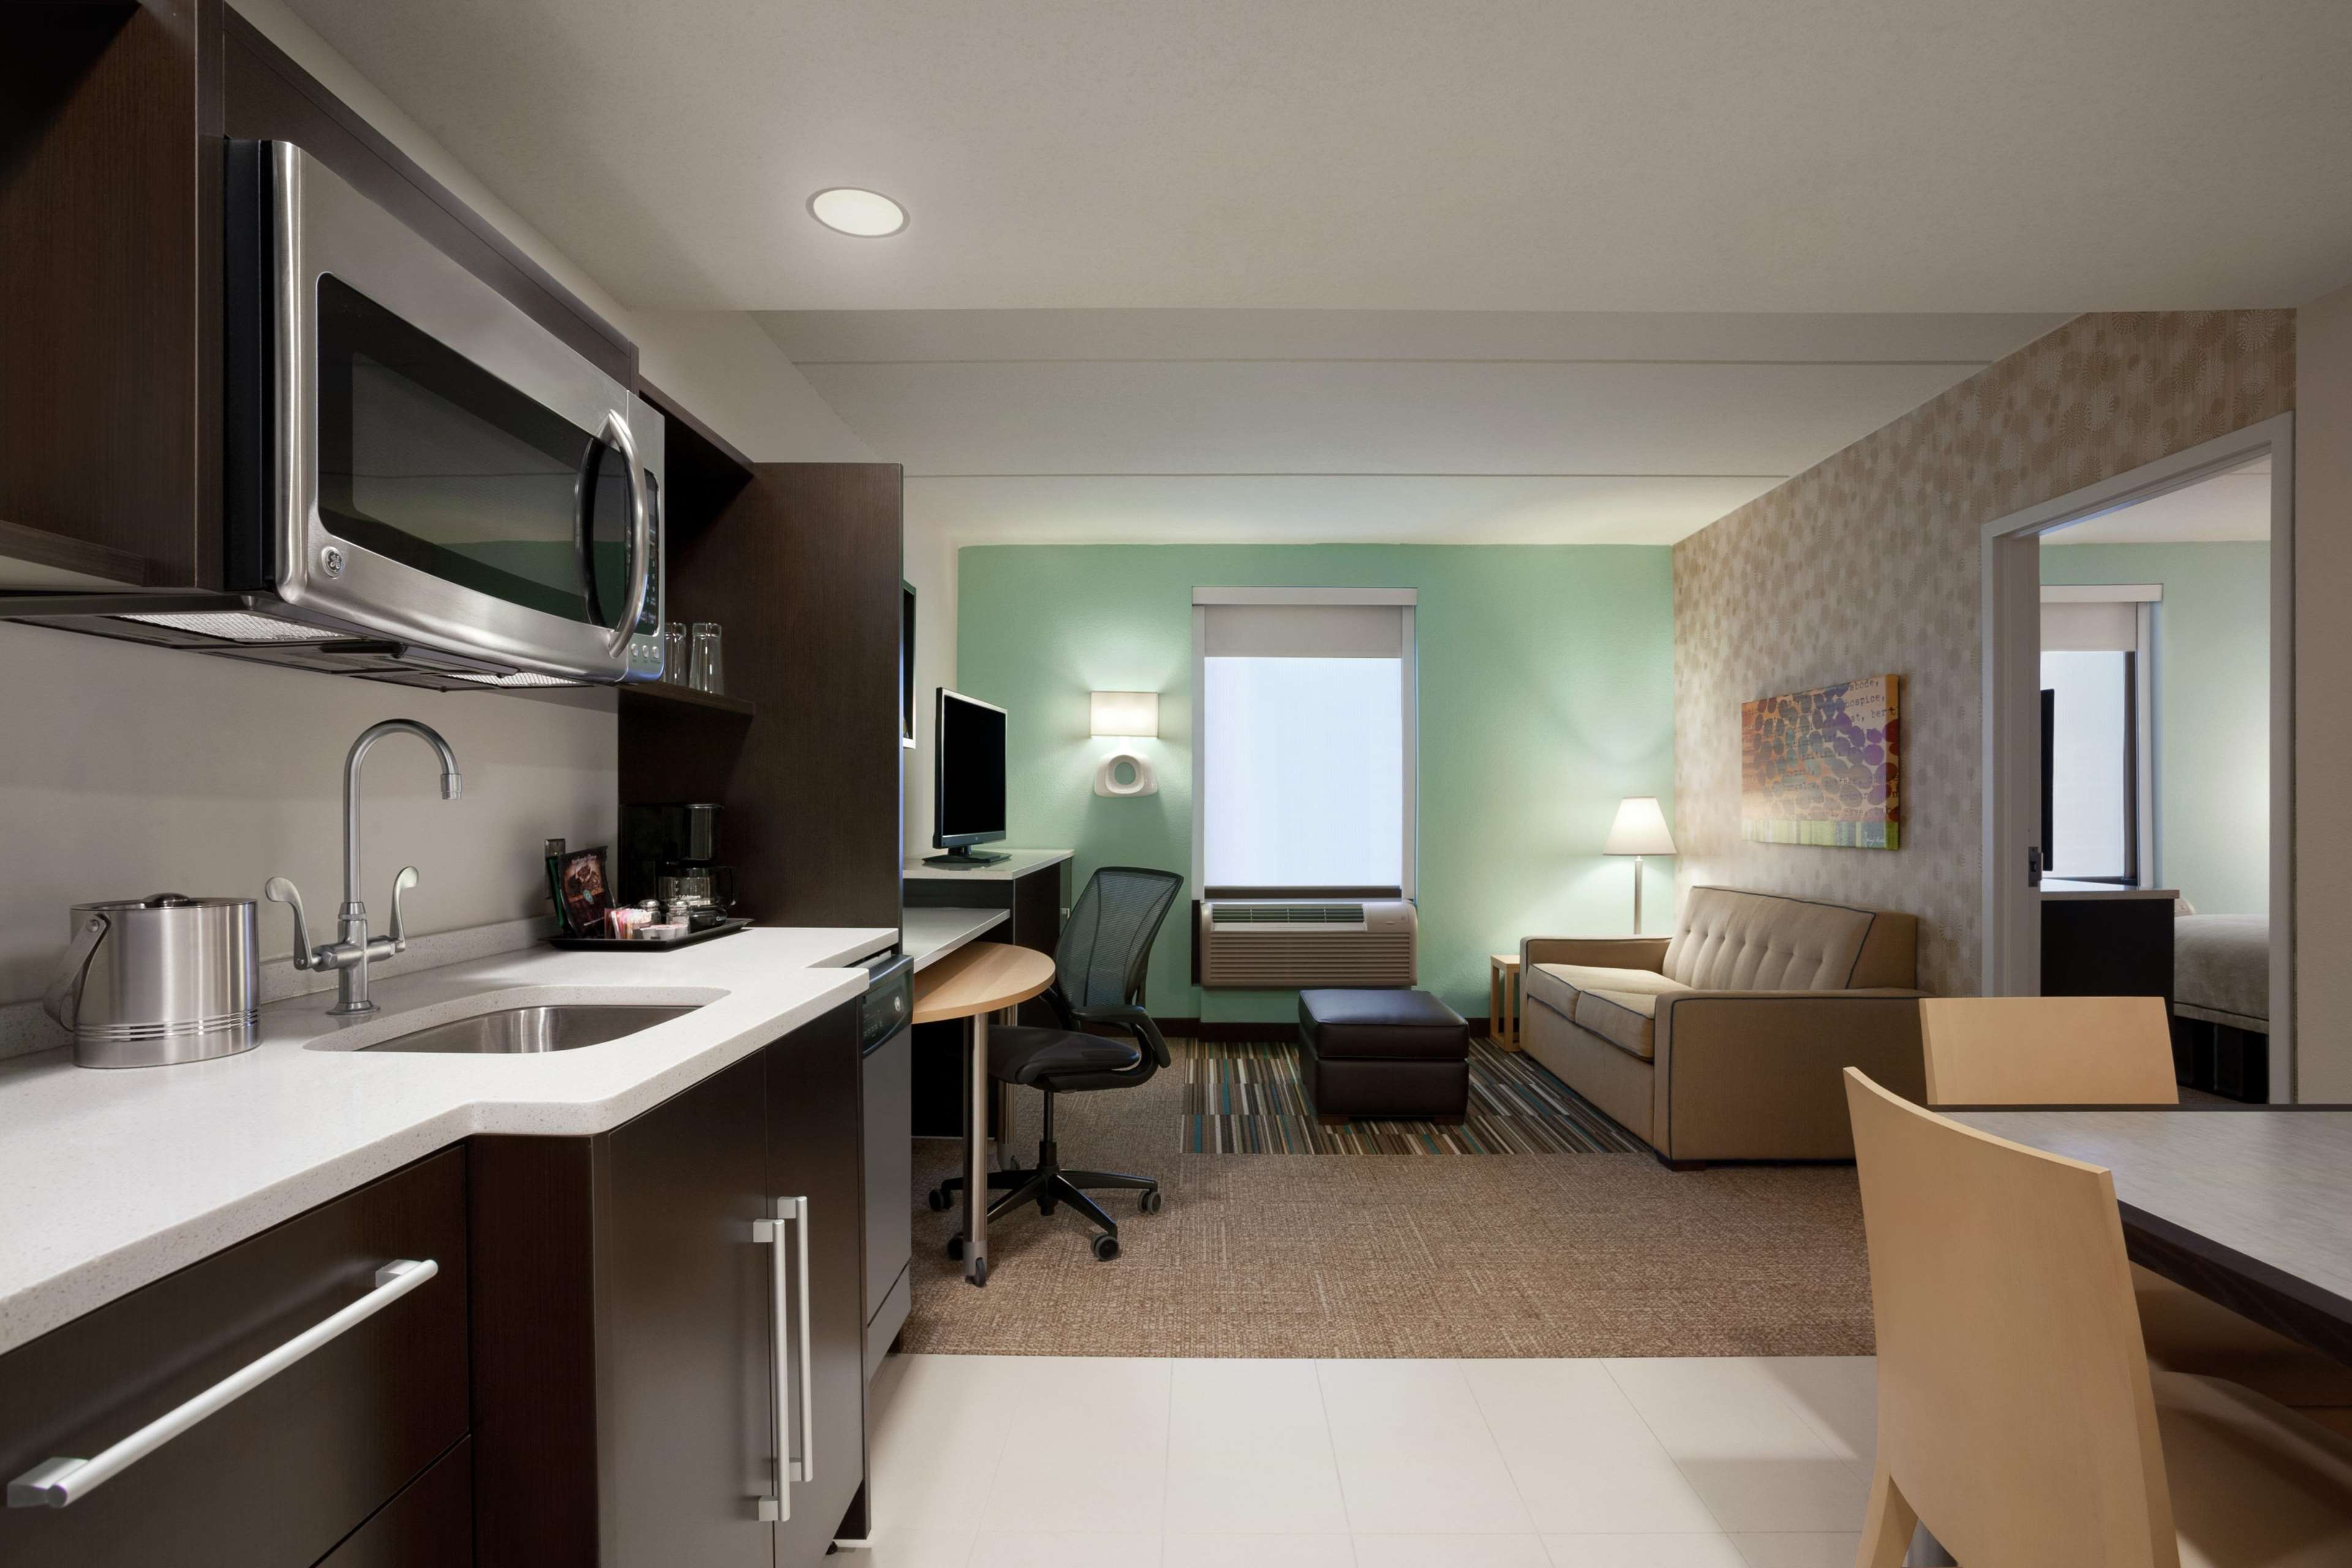 Home2 Suites by Hilton Philadelphia - Convention Center, PA Photo